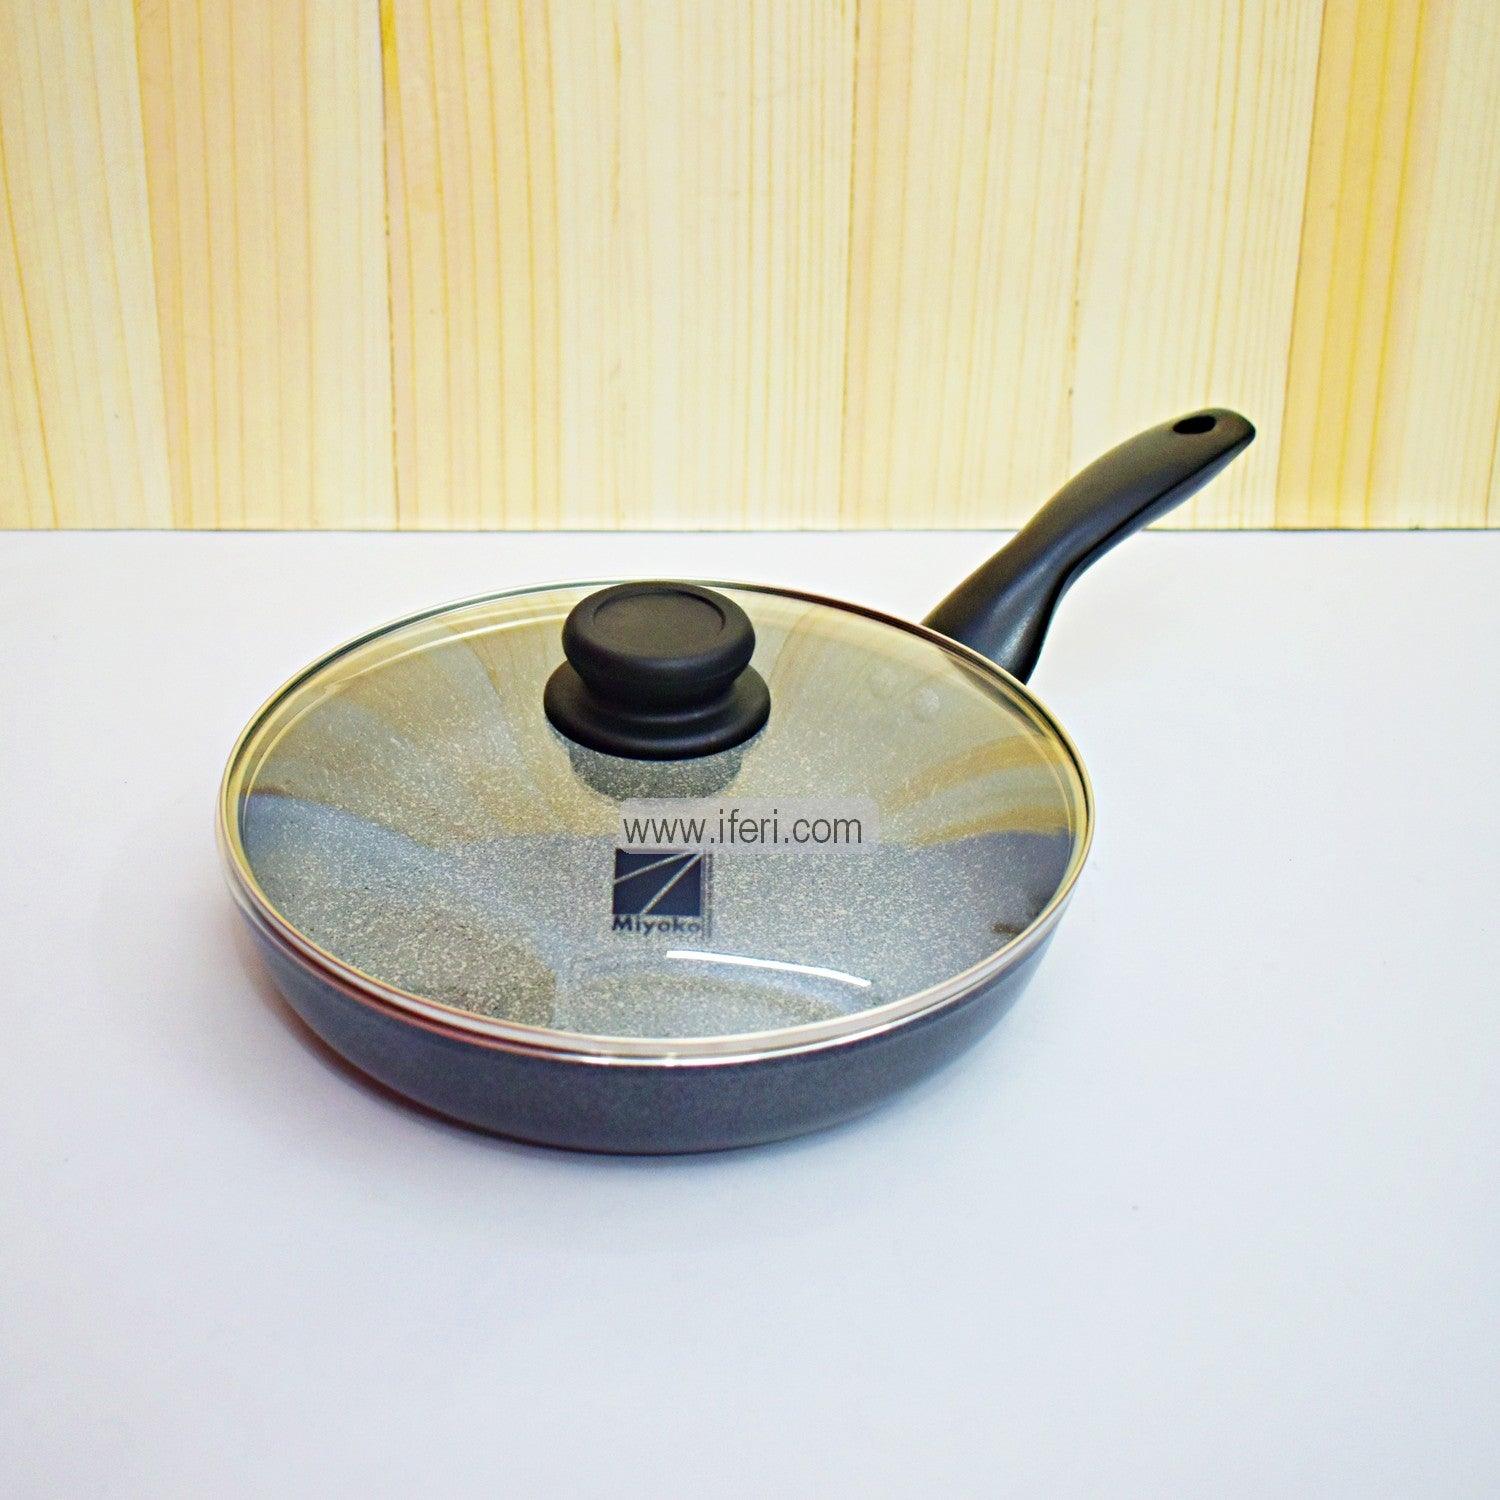 24 cm Miyako Non Stick Frypan With Lid BCG1017 Price in Bangladesh - iferi.com